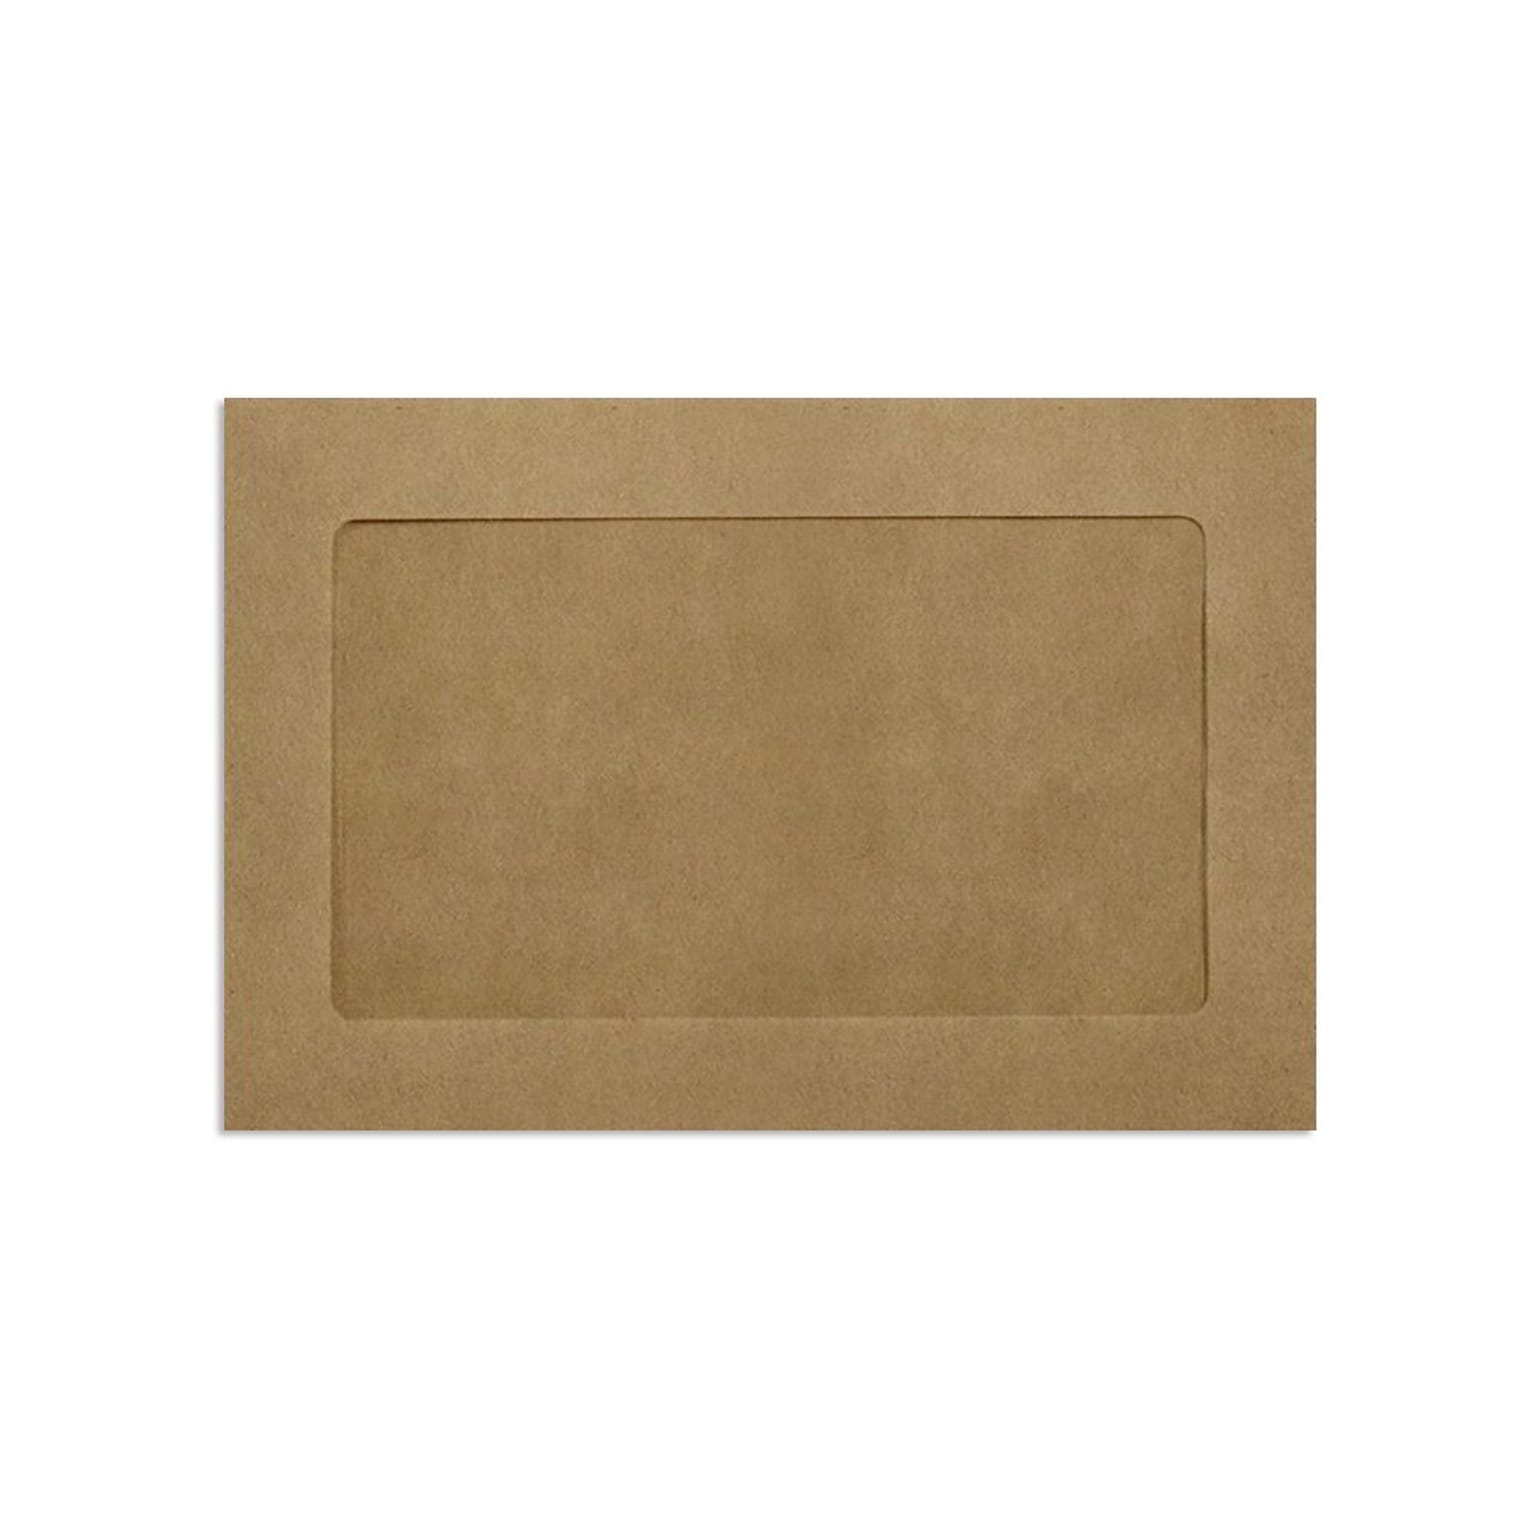 LUX Moistenable Glue #1 Window Envelope, 6 x 9, Grocery, 50/Pack (FFW-69-GB-50)